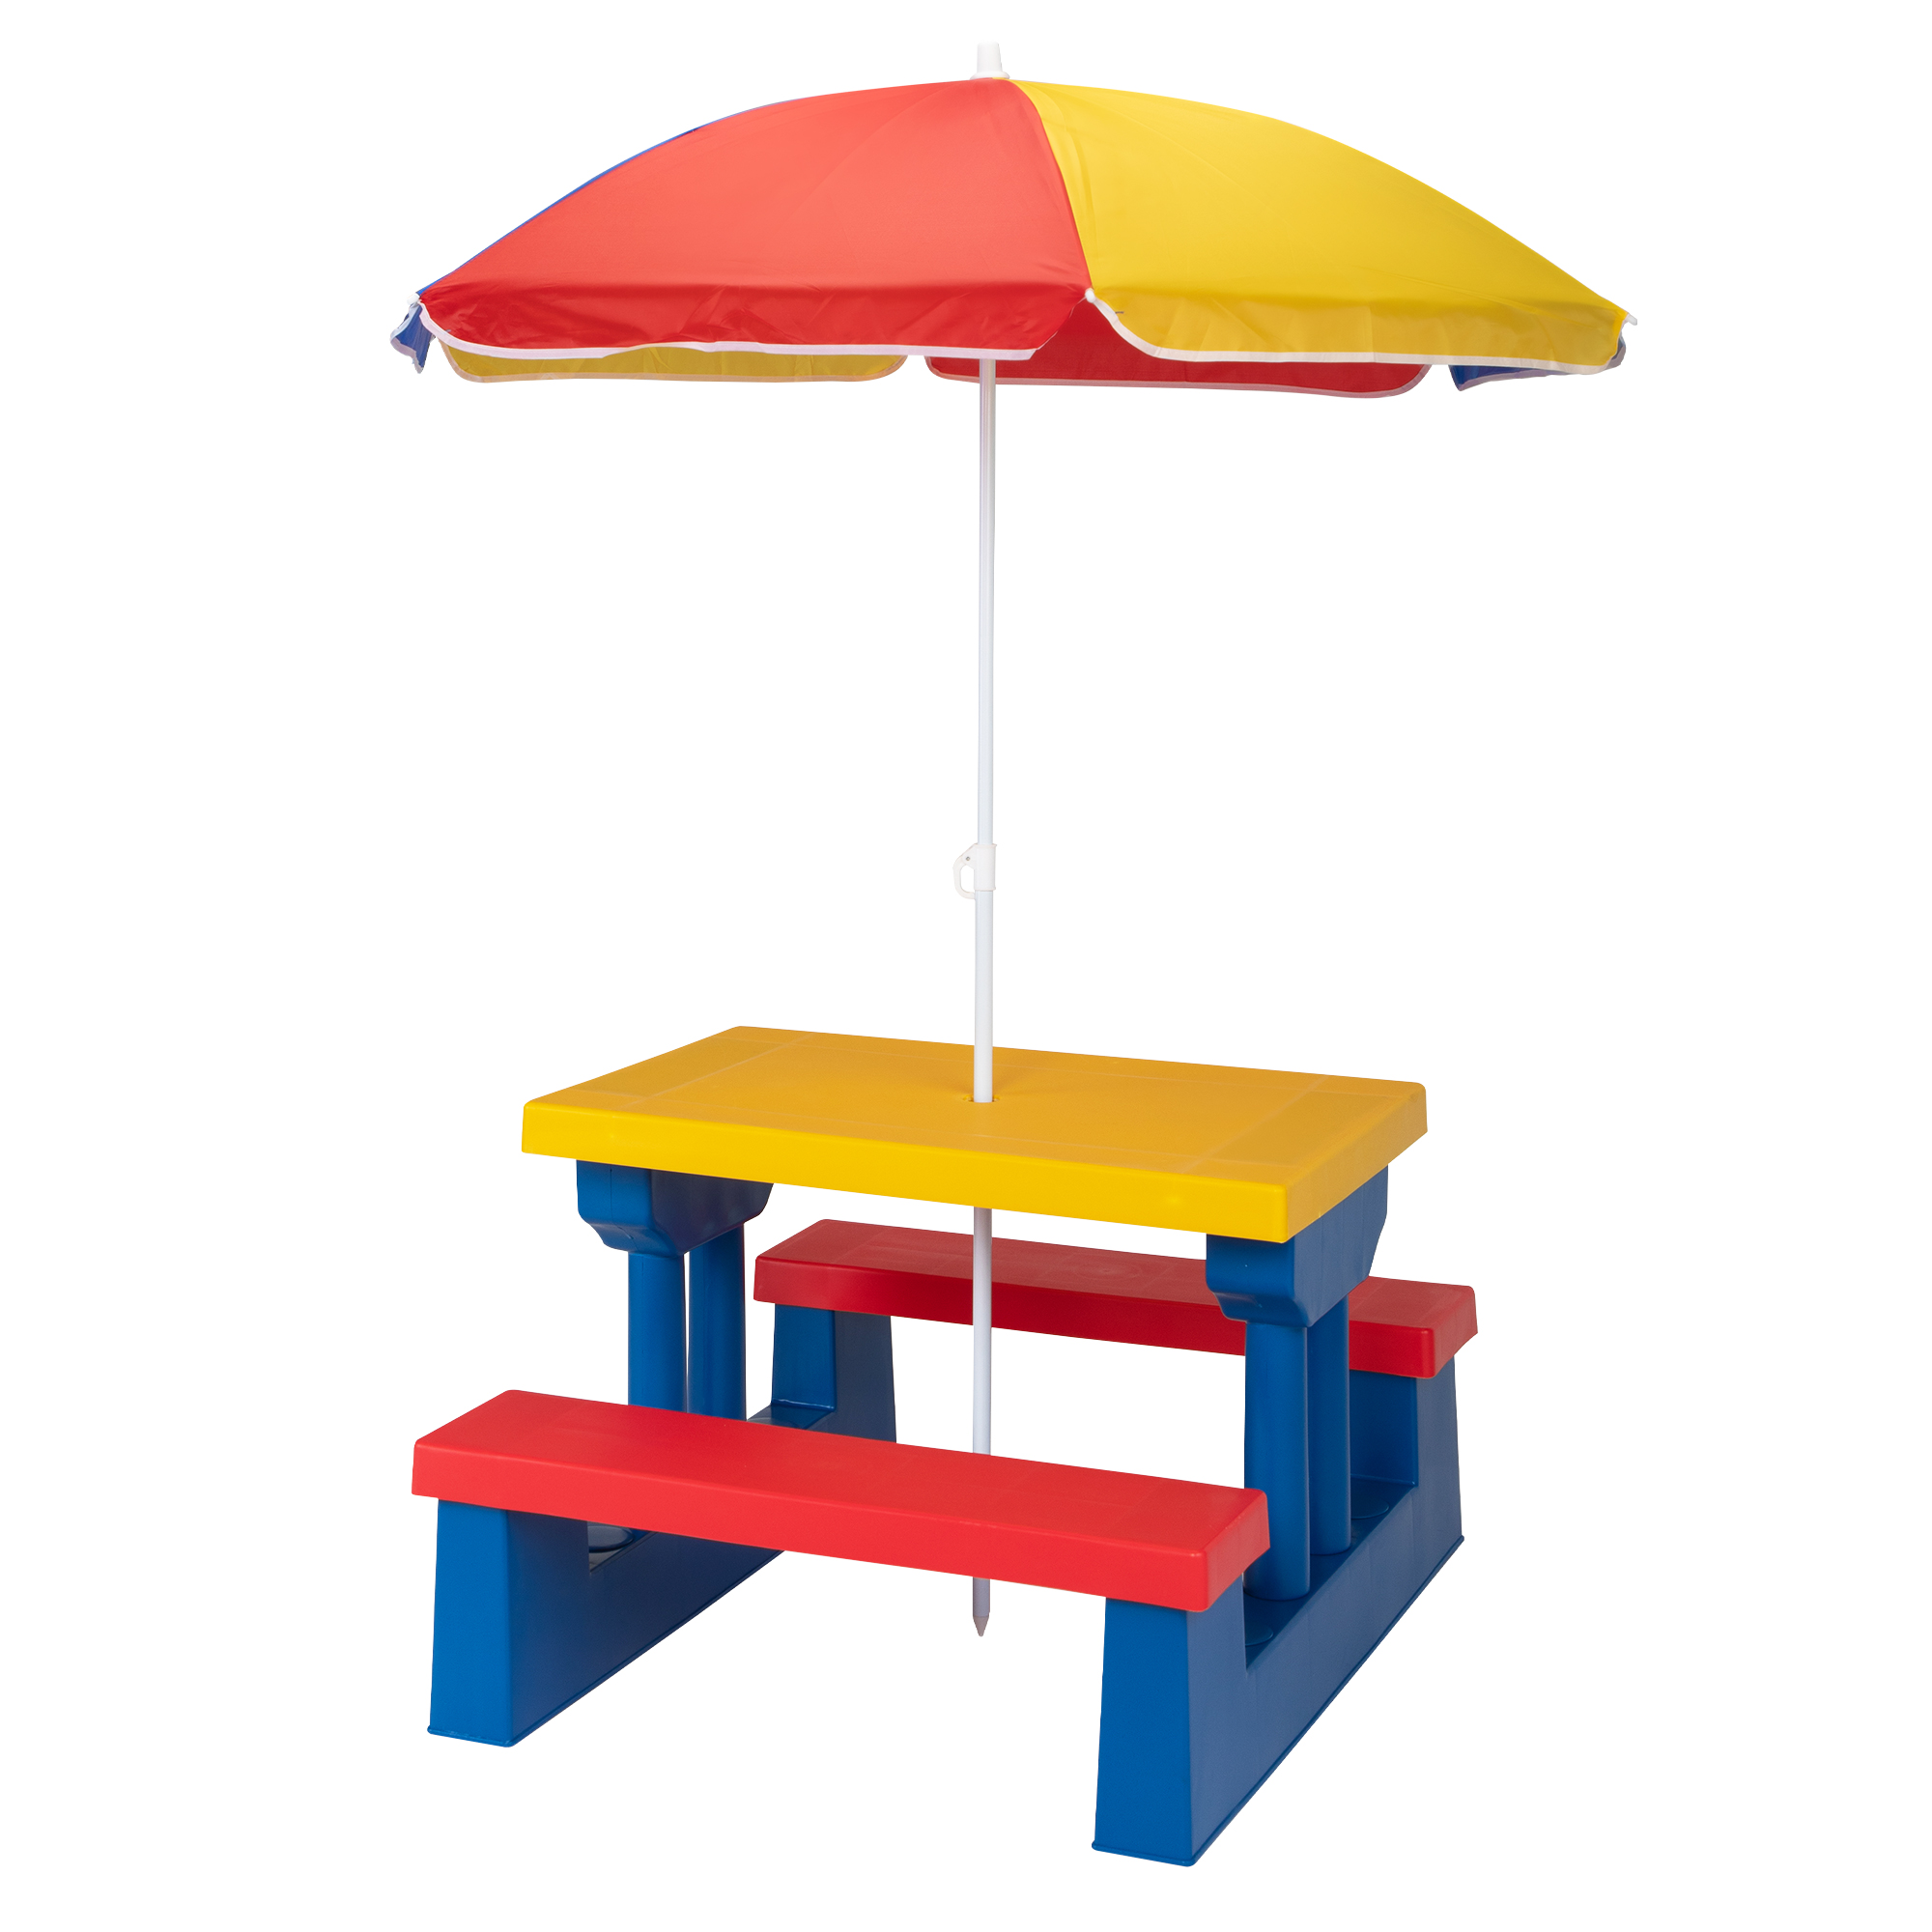 Cfowner Kids Picnic Table Set W/Removable Umbrella Indoor Outdoor Garden Patio - image 3 of 6